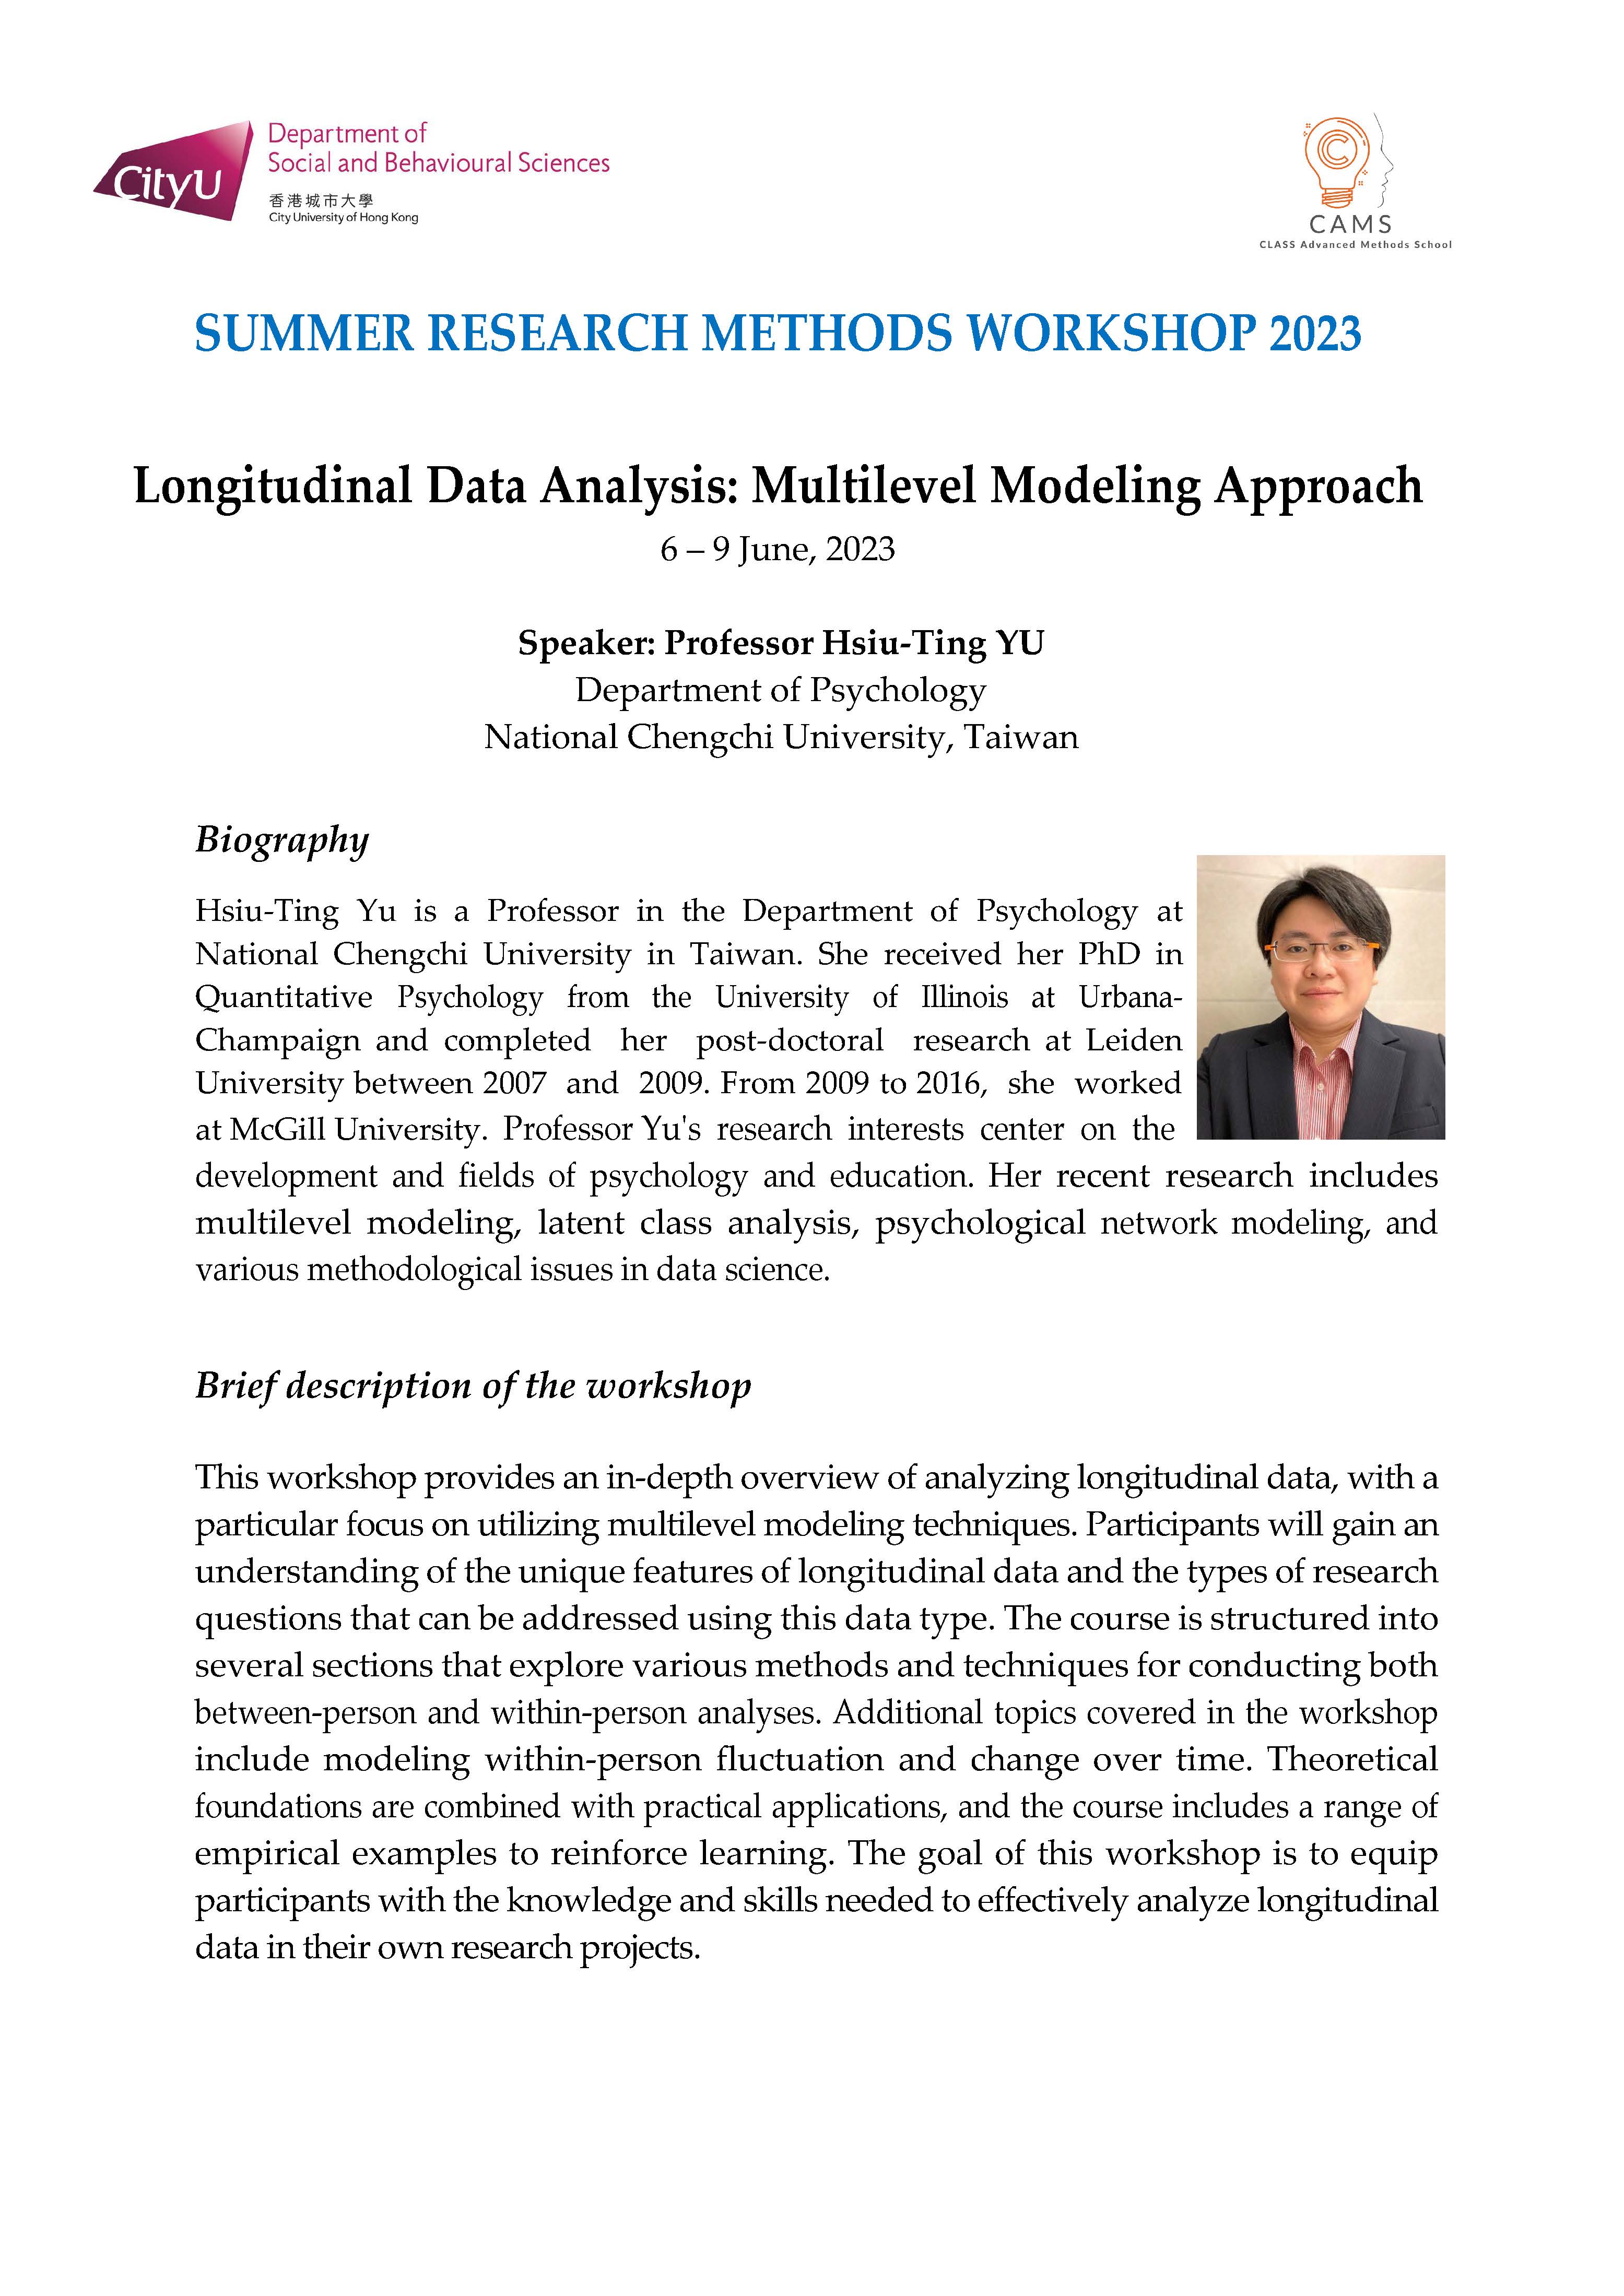 Longitudinal Data Analysis: Multilevel Modeling Approach